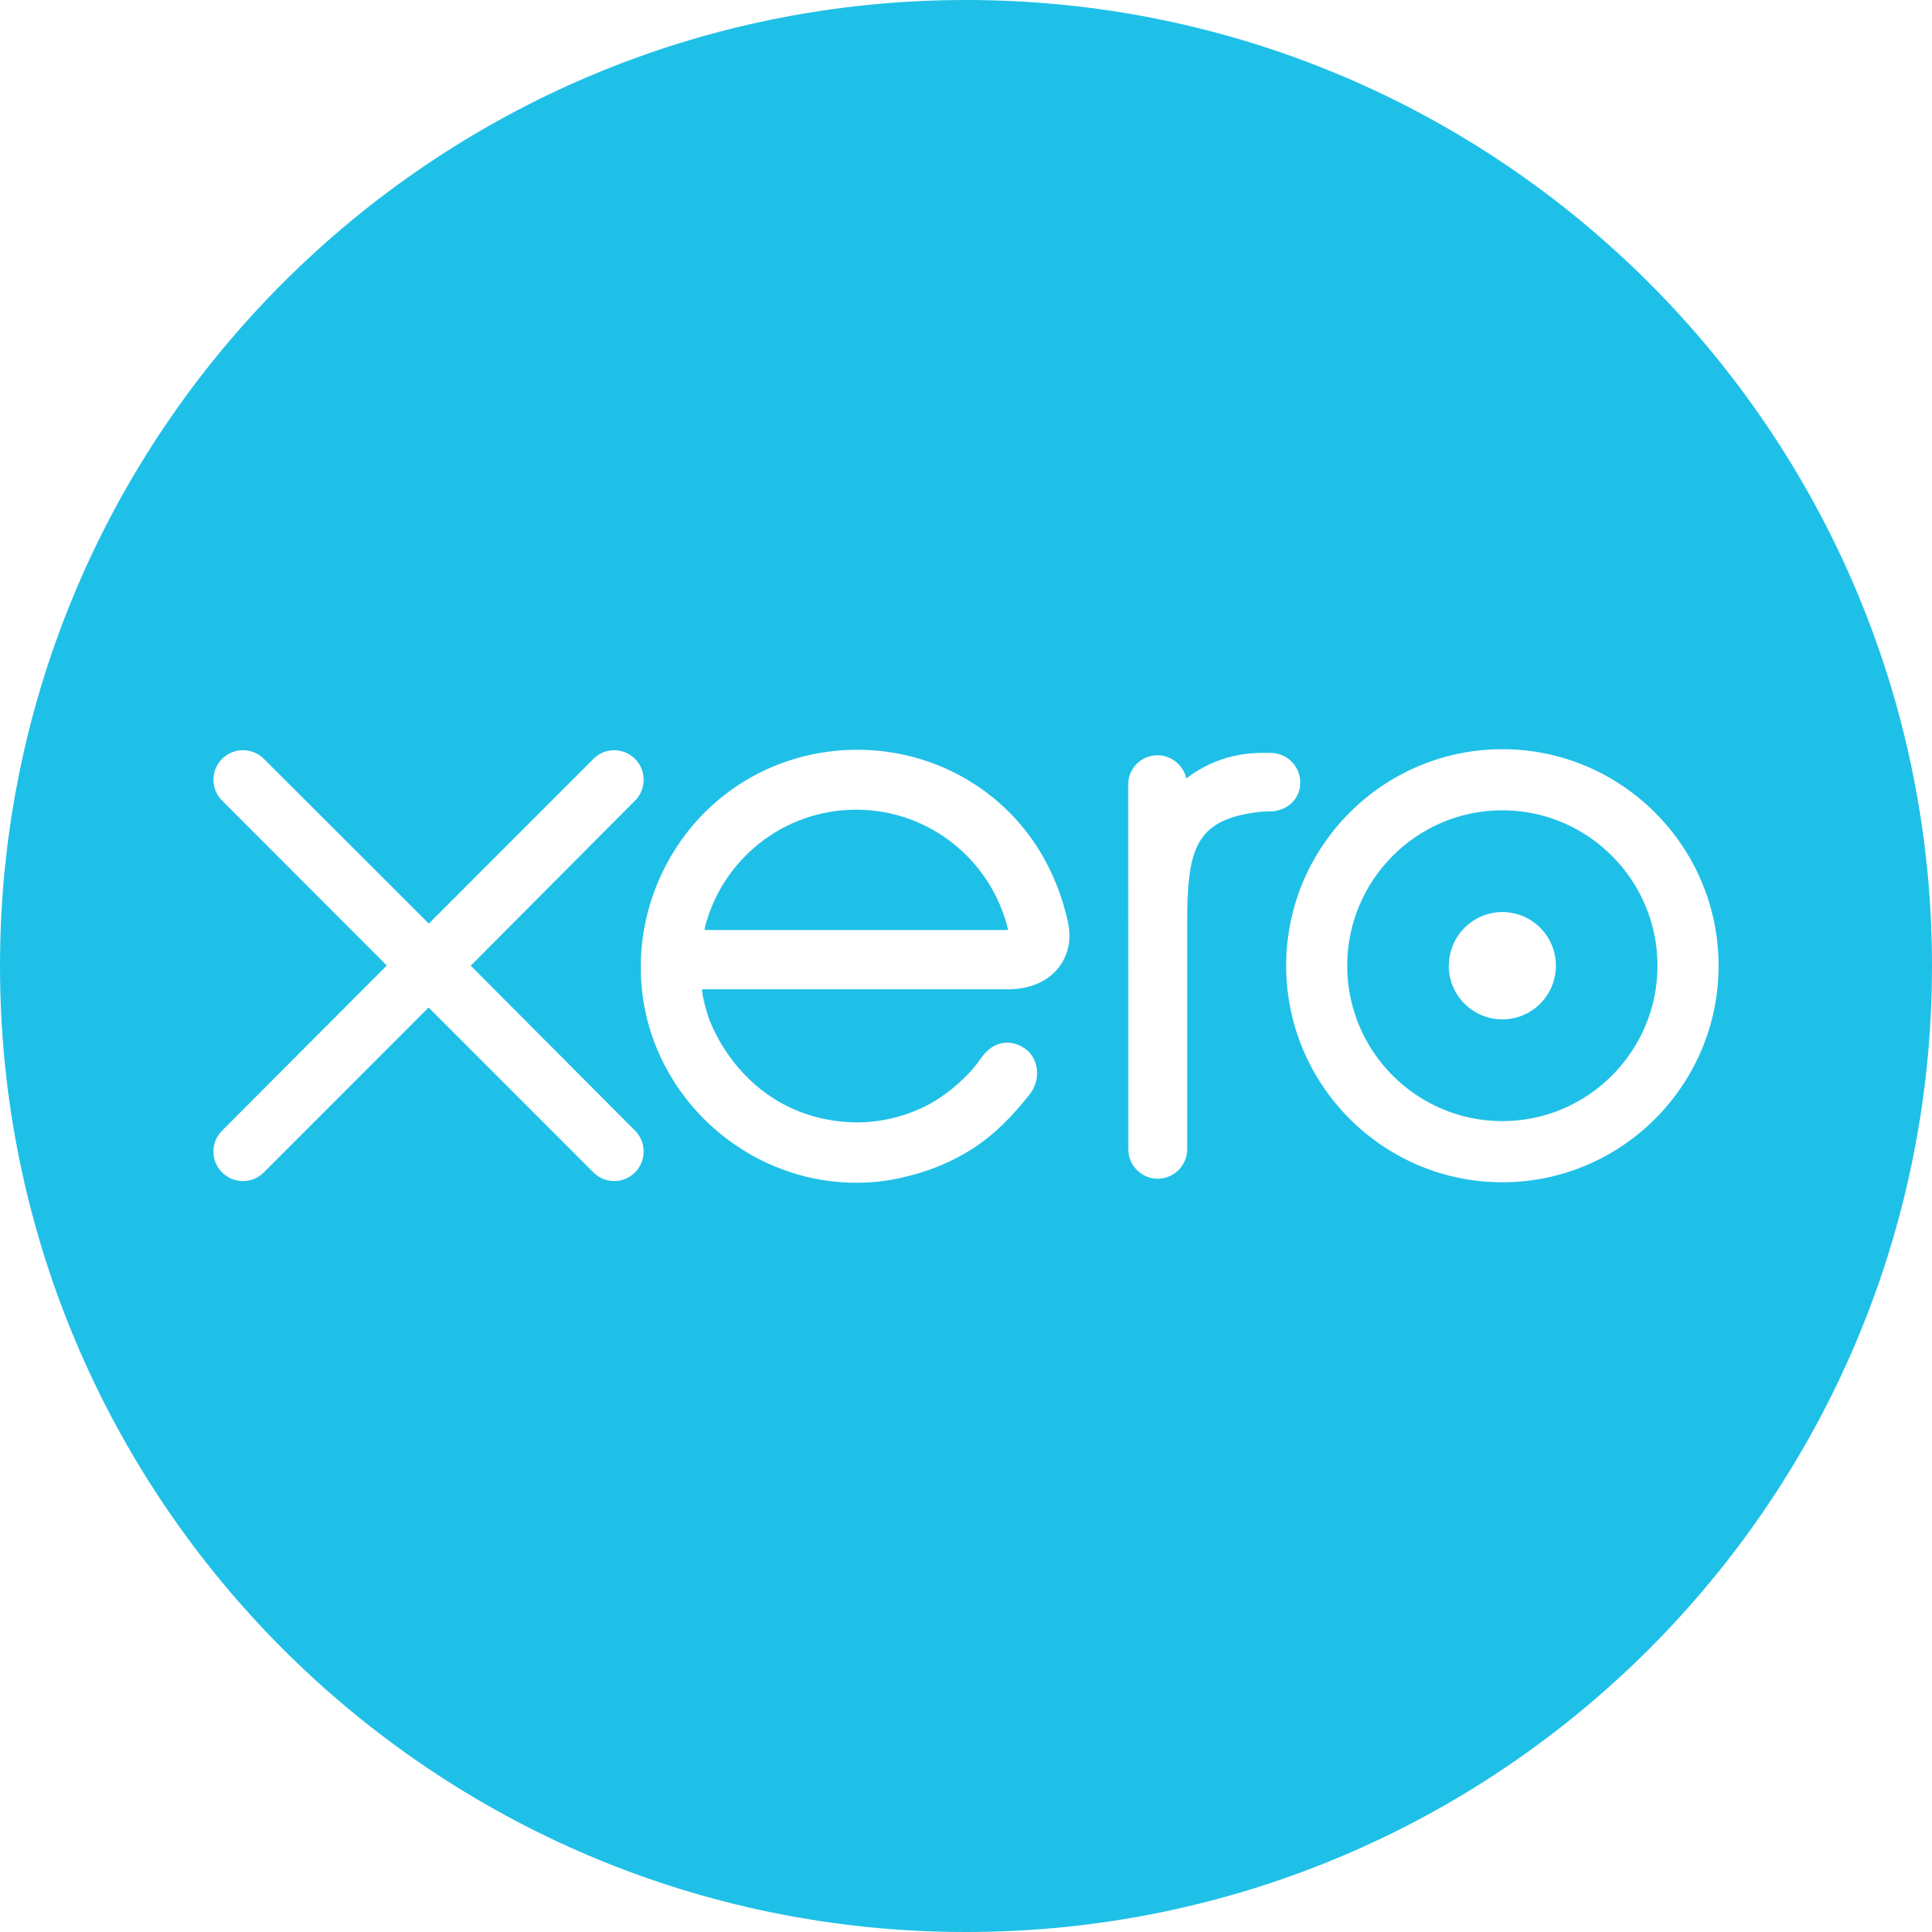 xero-1-logo-png-transparent